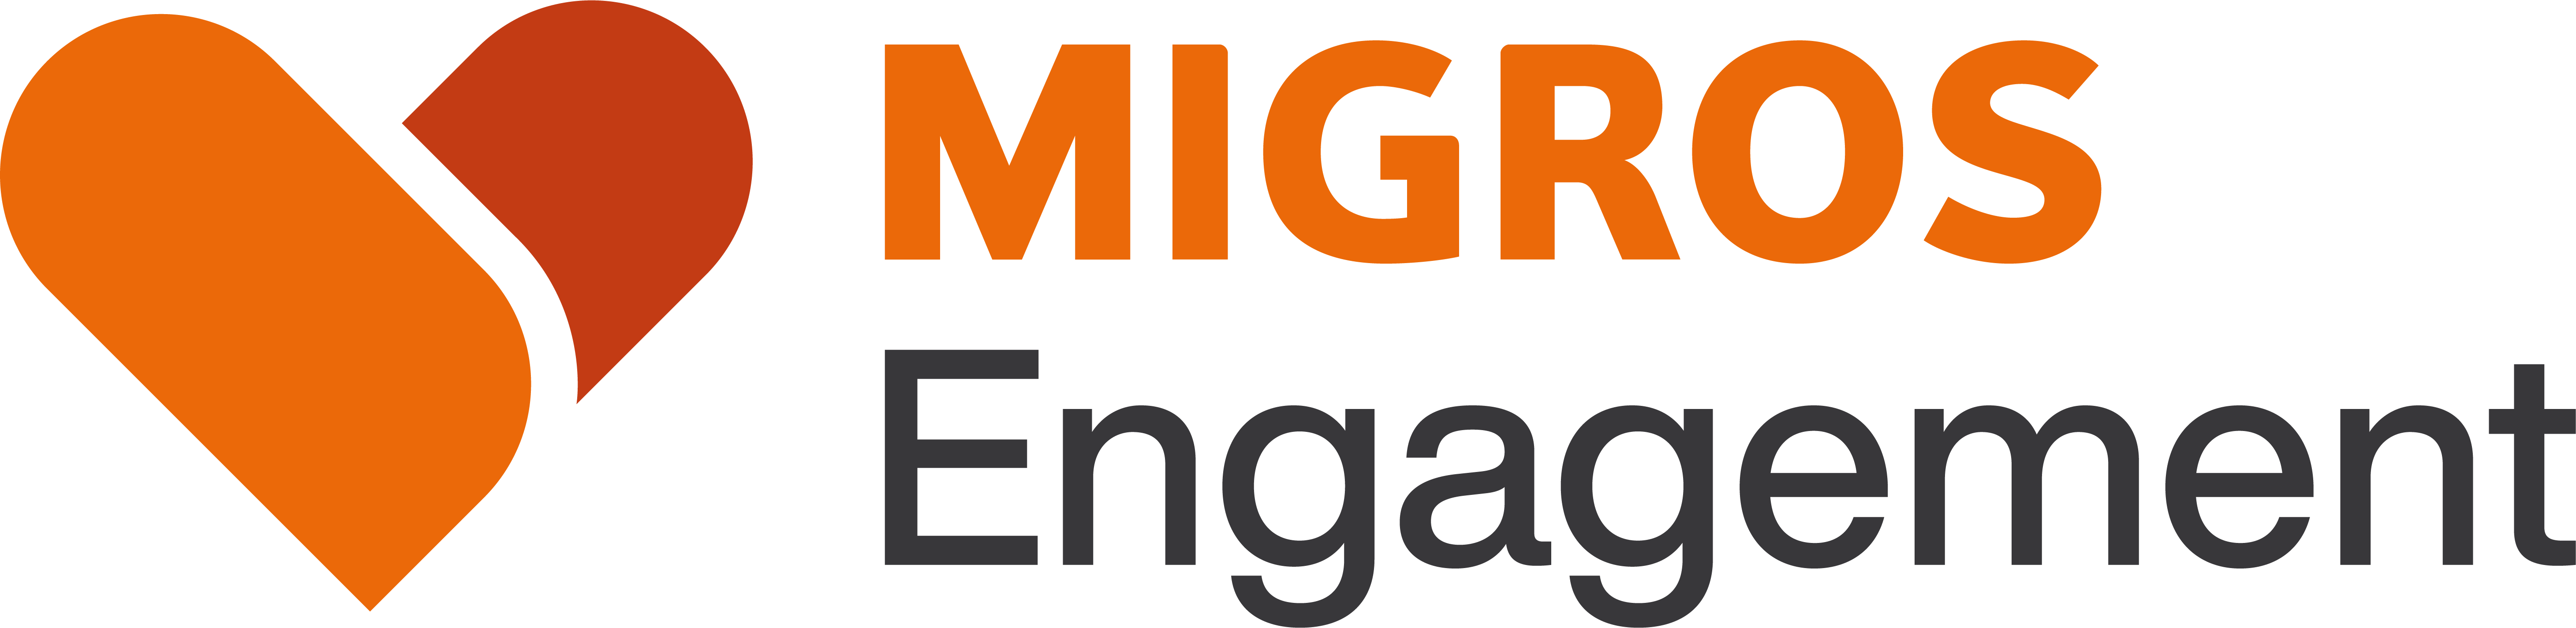 Migros engagement